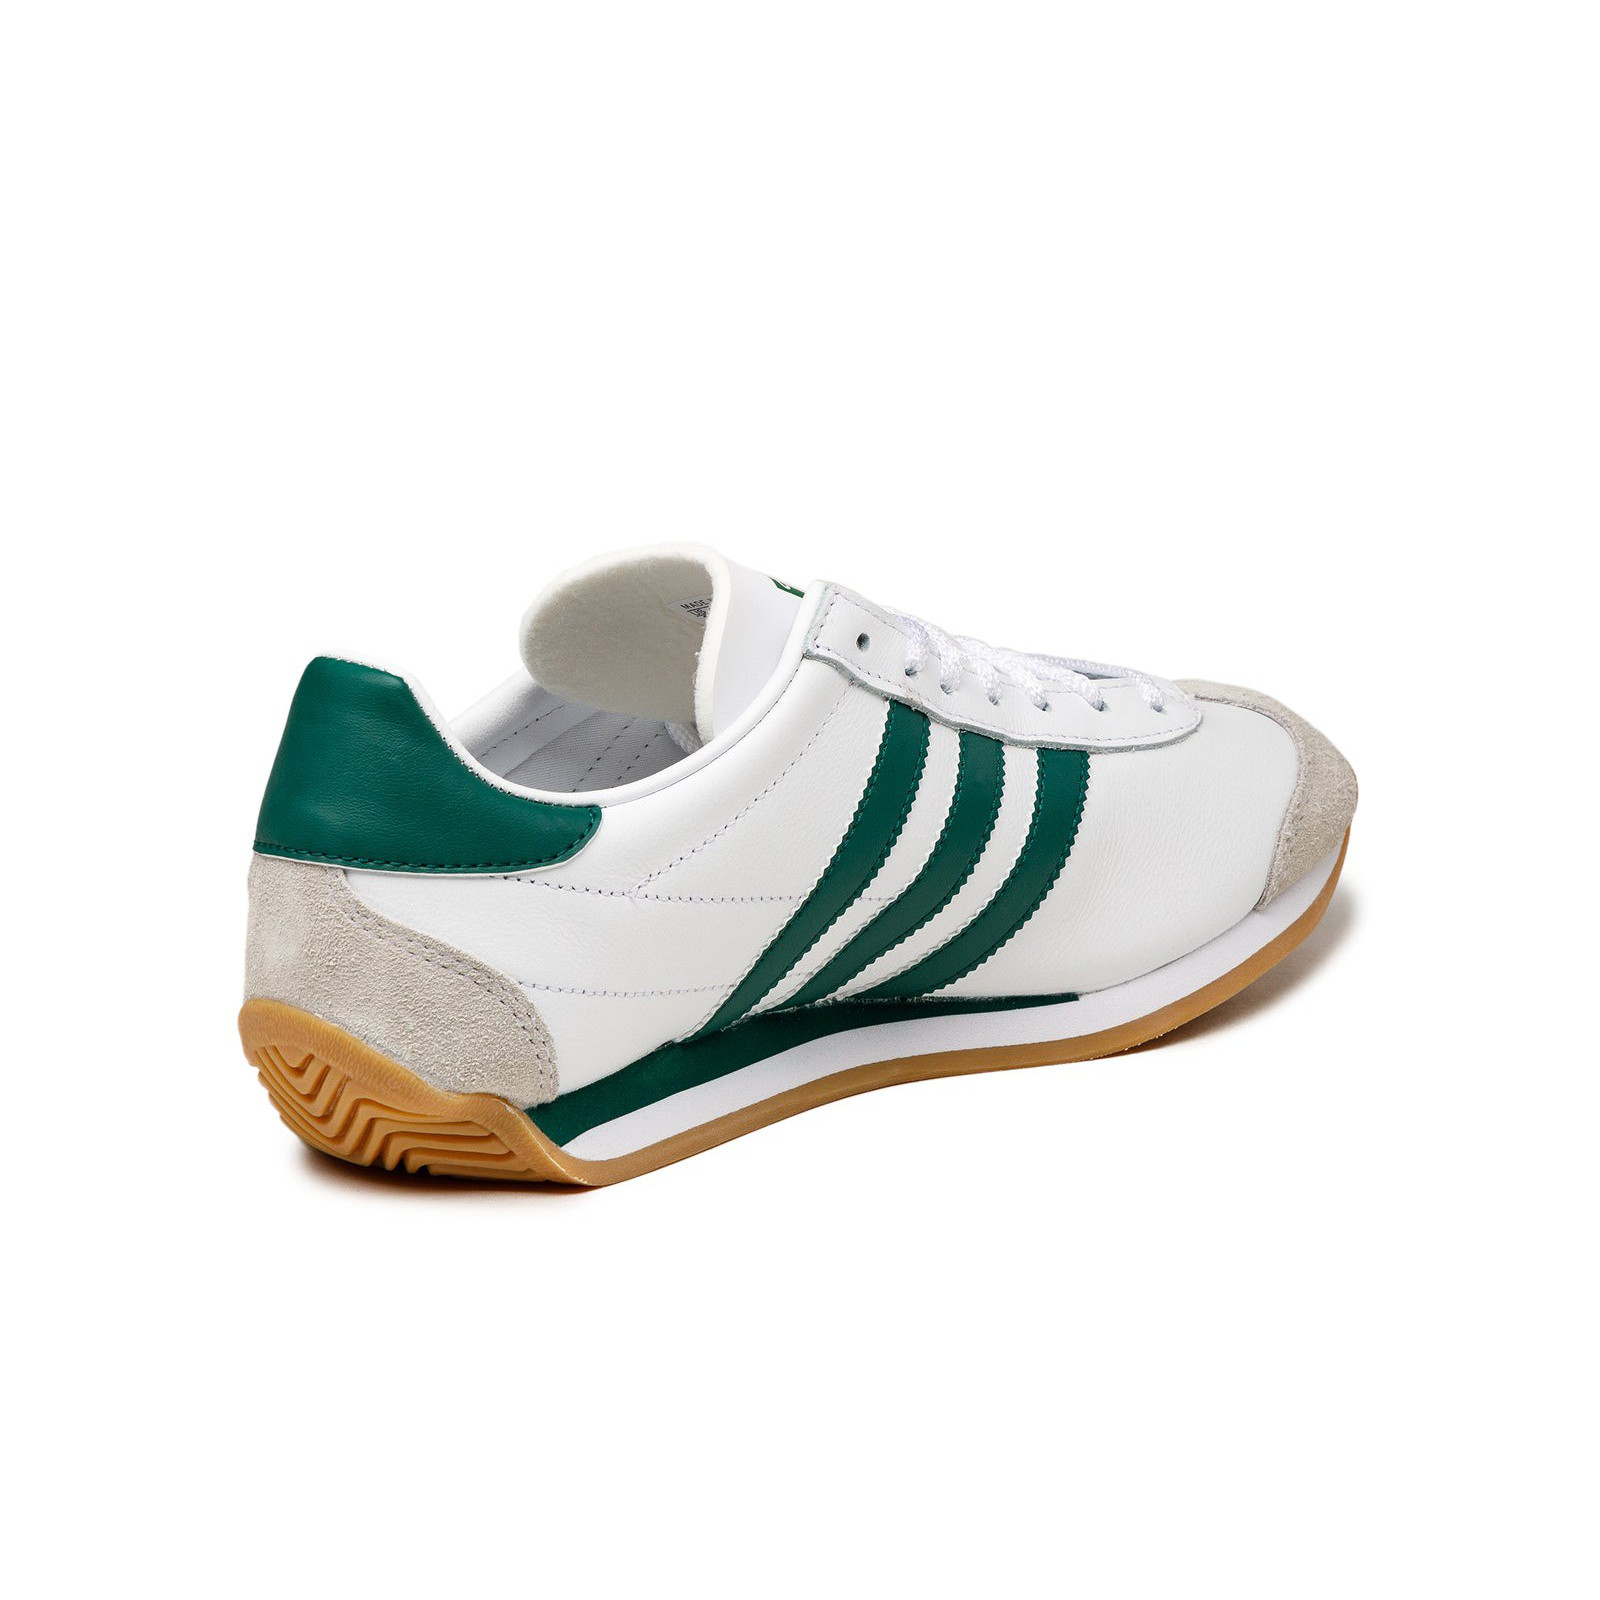 Adidas Country OG
Footwear White / Collegiate Green